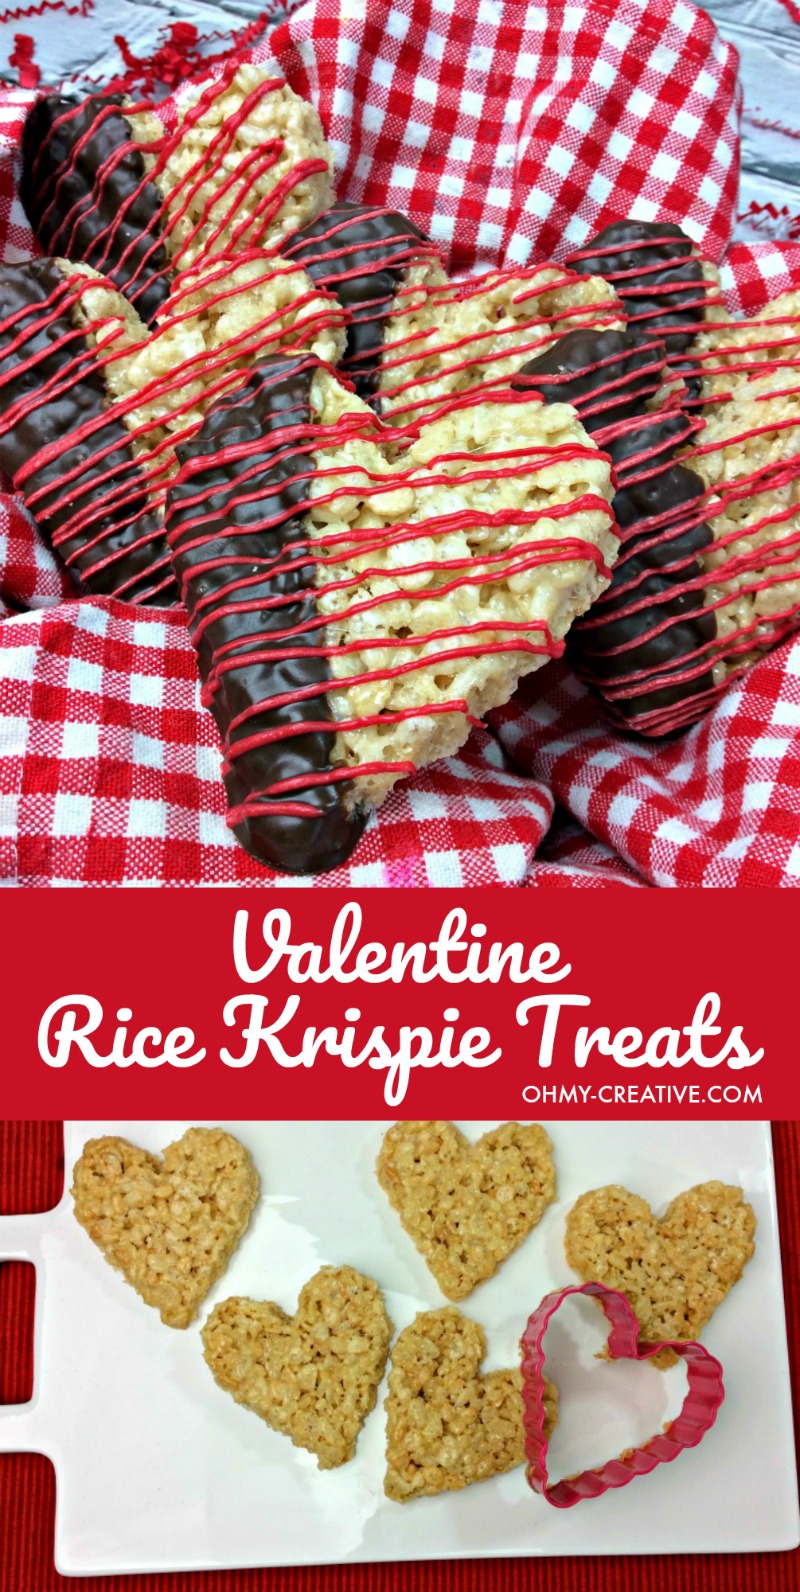 Valentine's Day Rice Krispie Treats | OHMY-CREATIVE.COM | Heart Shaped Rice Krispie Treats | Homemade Rice Krispie Treats | Dipped Rice Krispie Treats | Cute Valentine's Day Ideas 